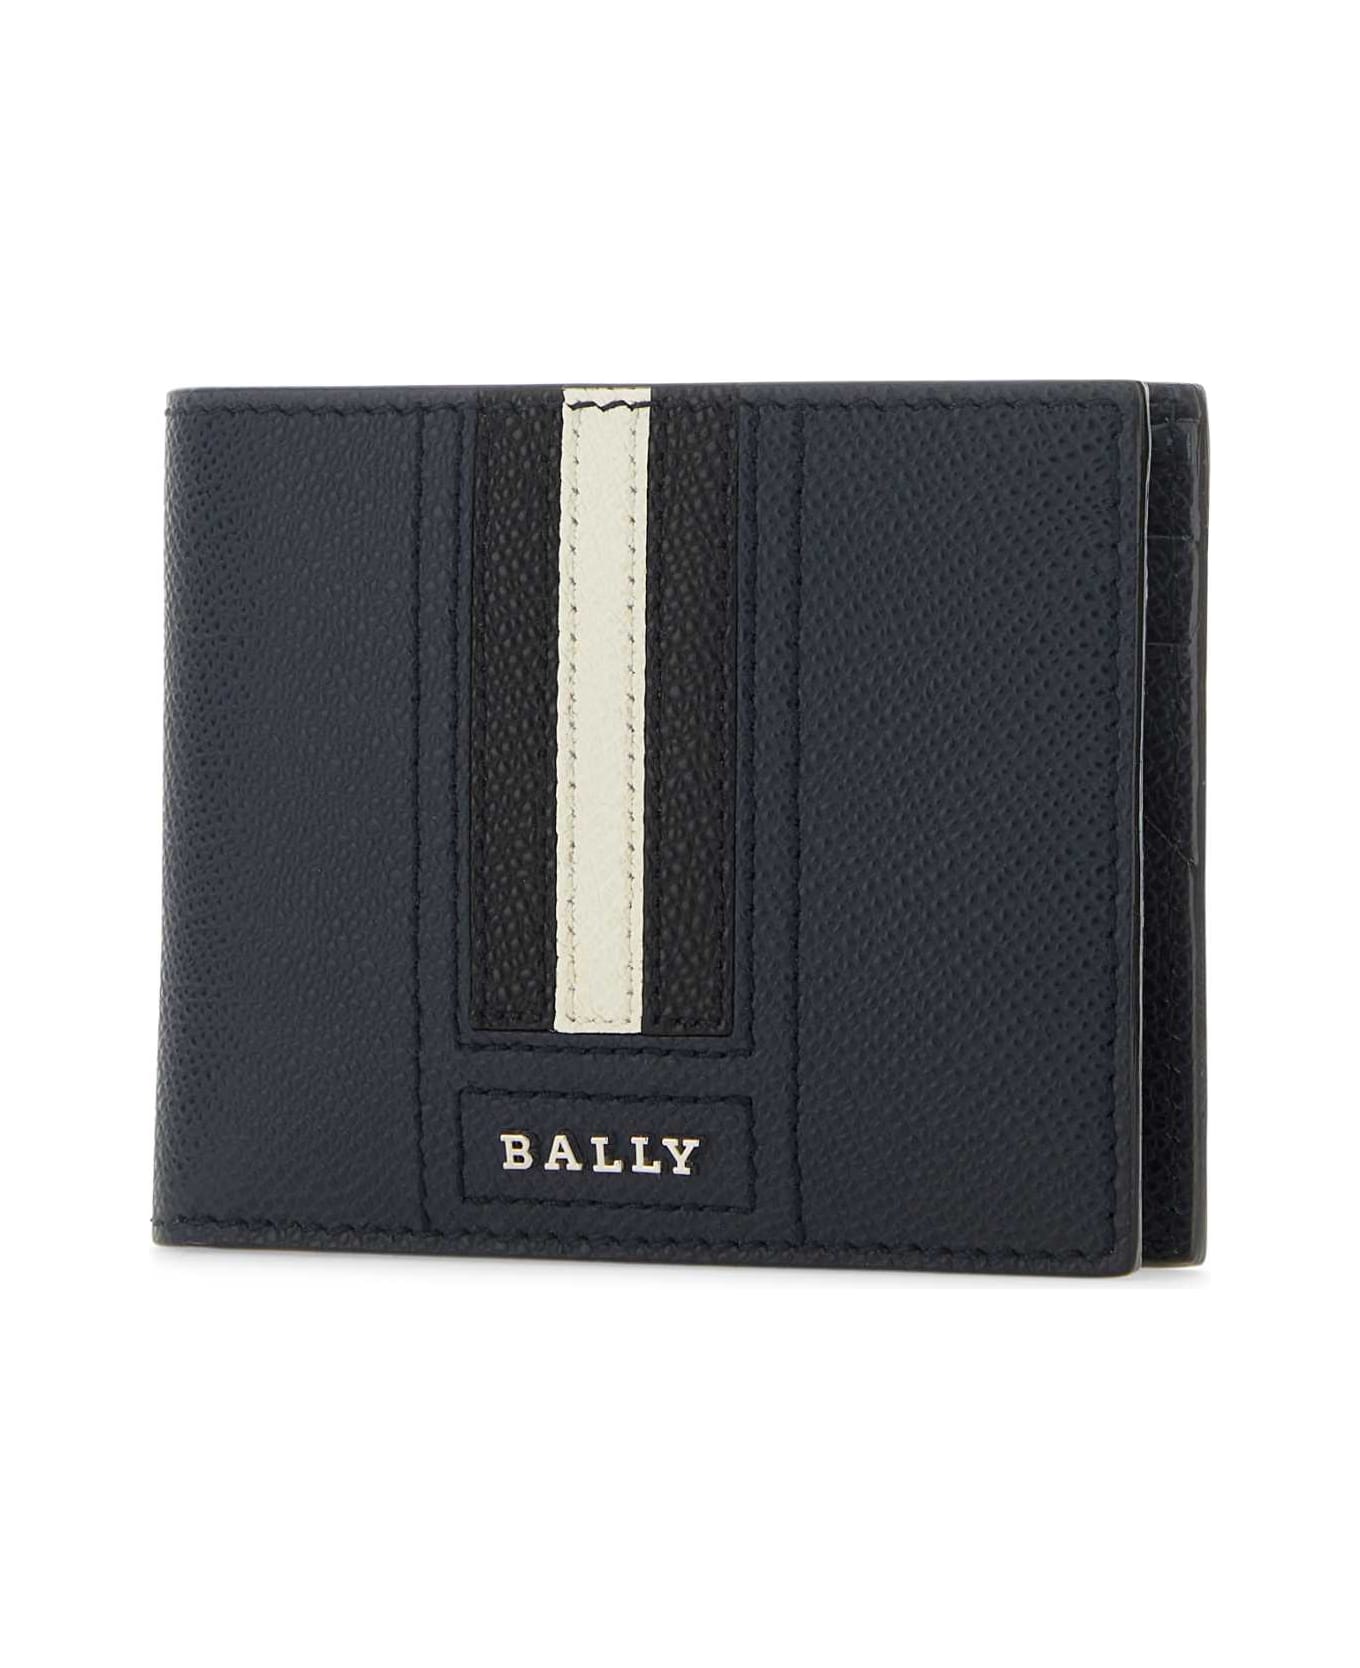 Bally Navy Blue Leather Wallet - NEWBLUE 財布